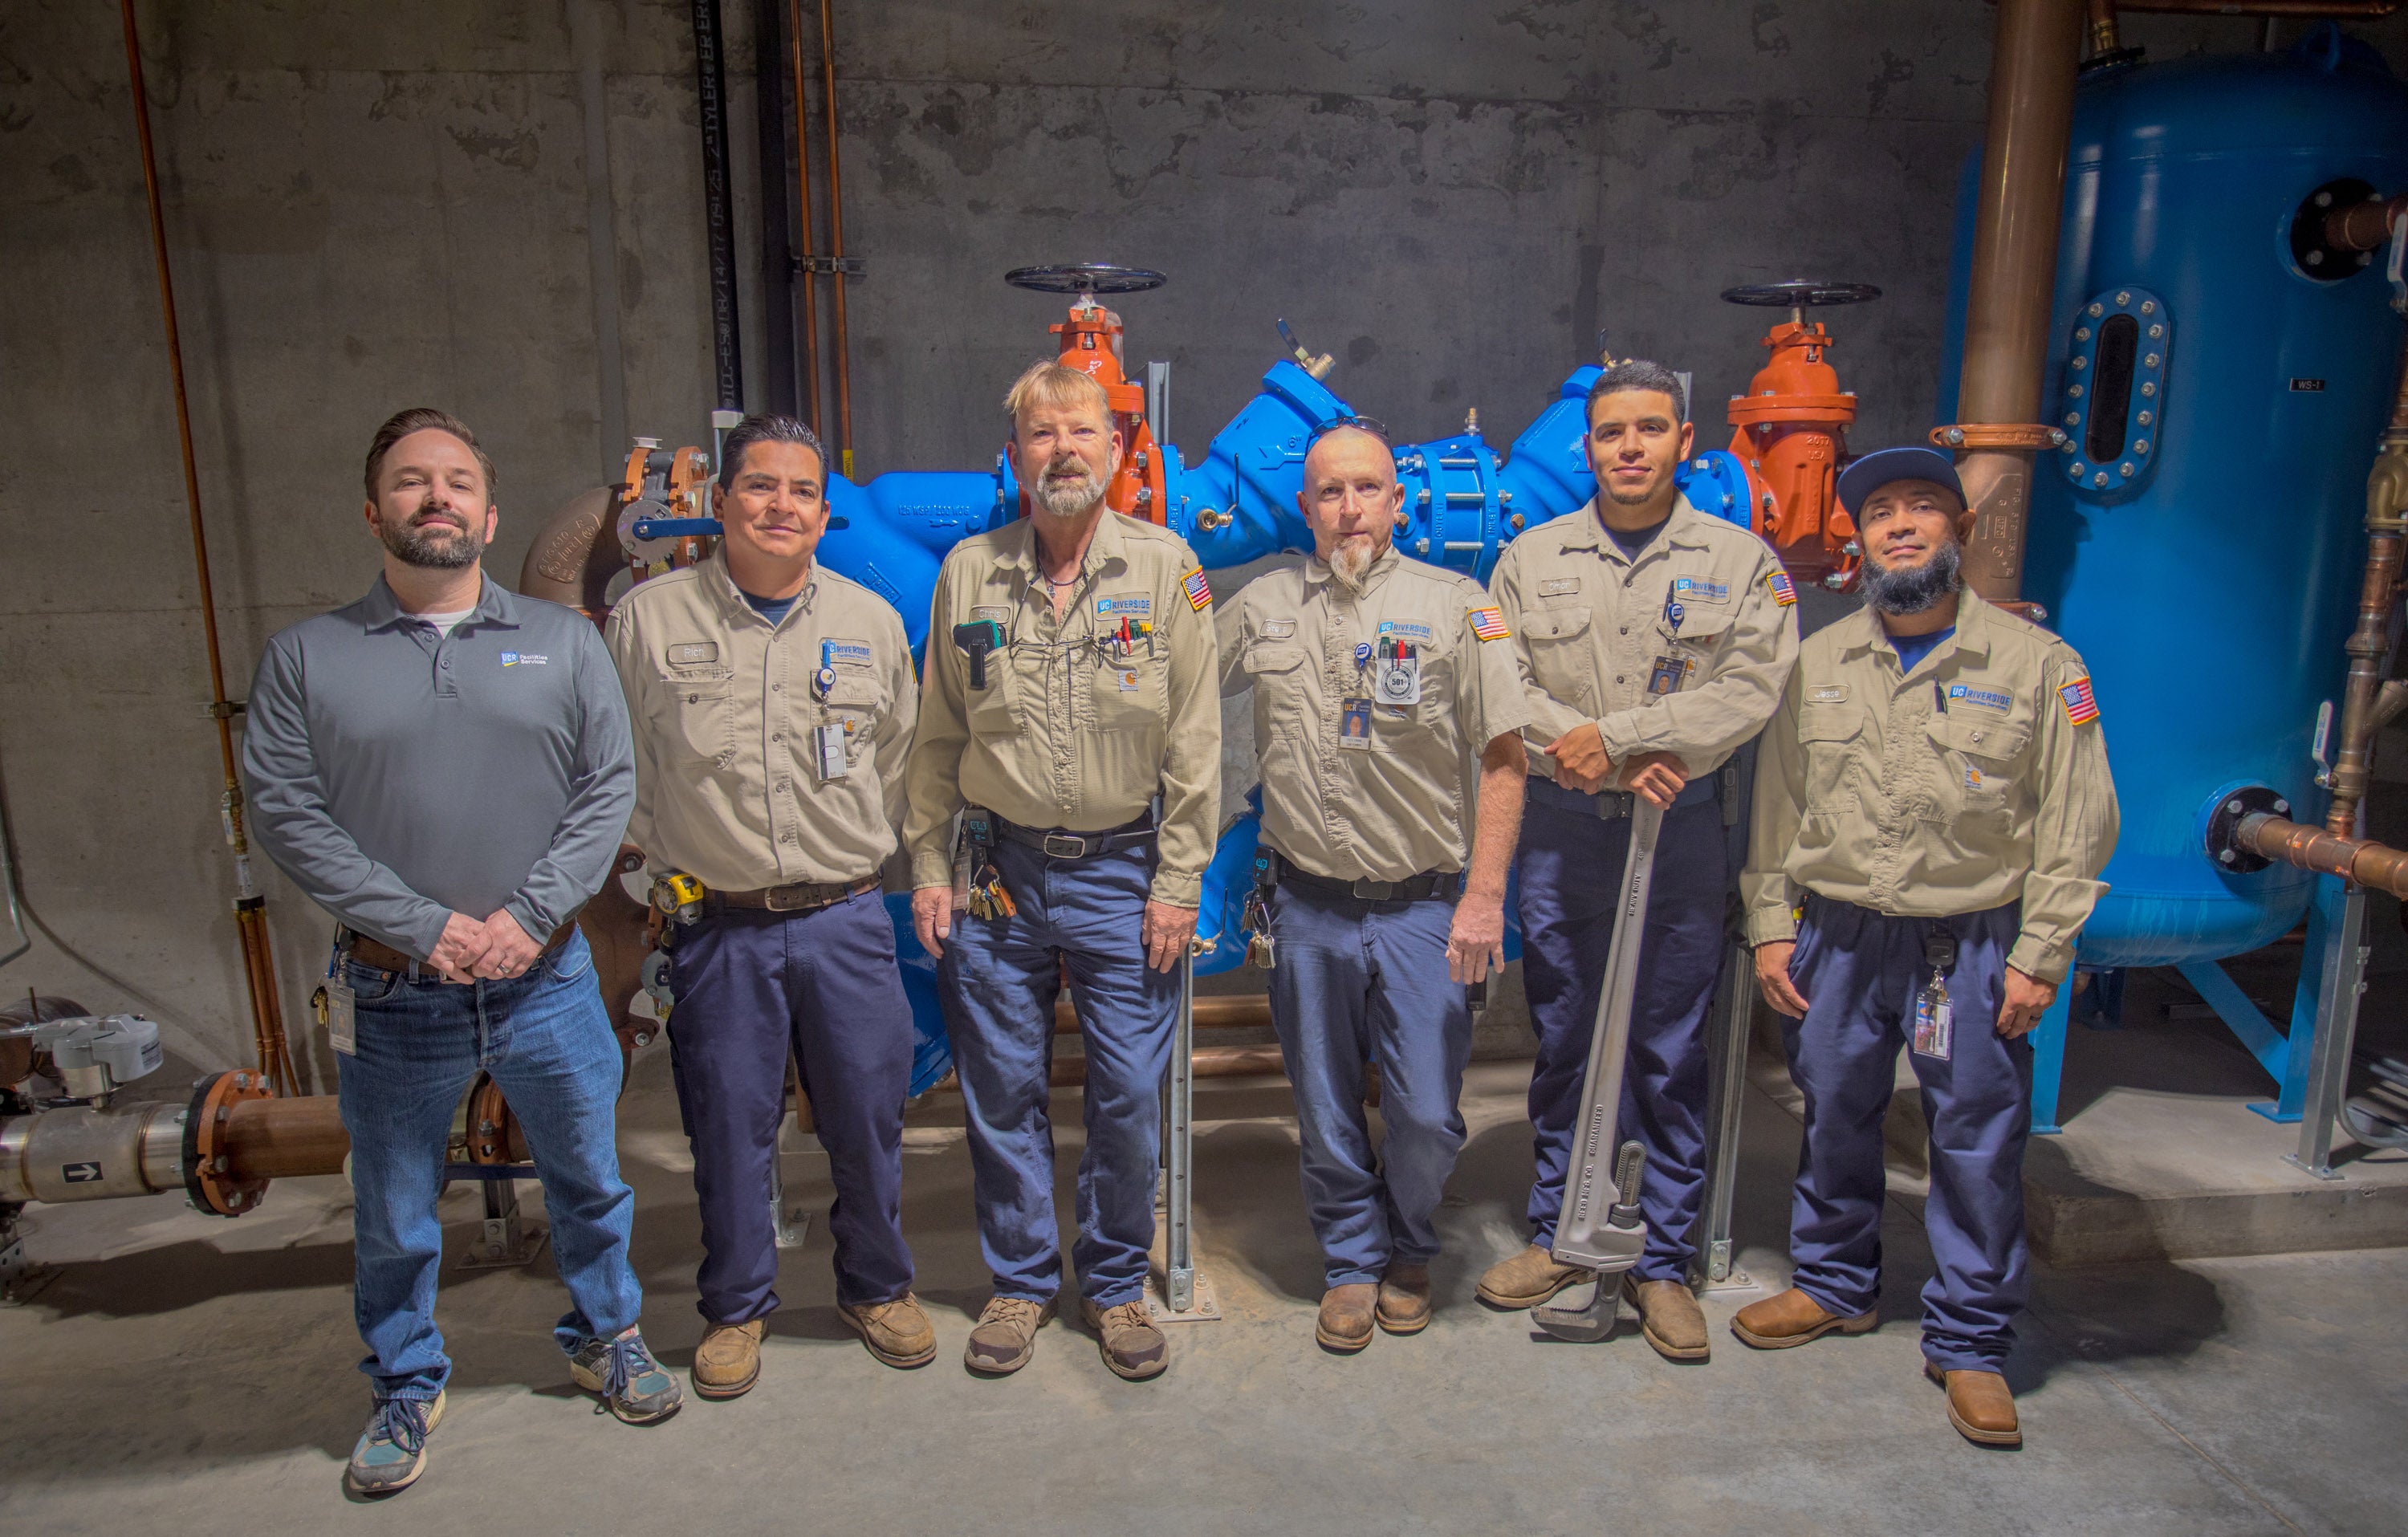 Seven workman standing in front of plumbing system in basement